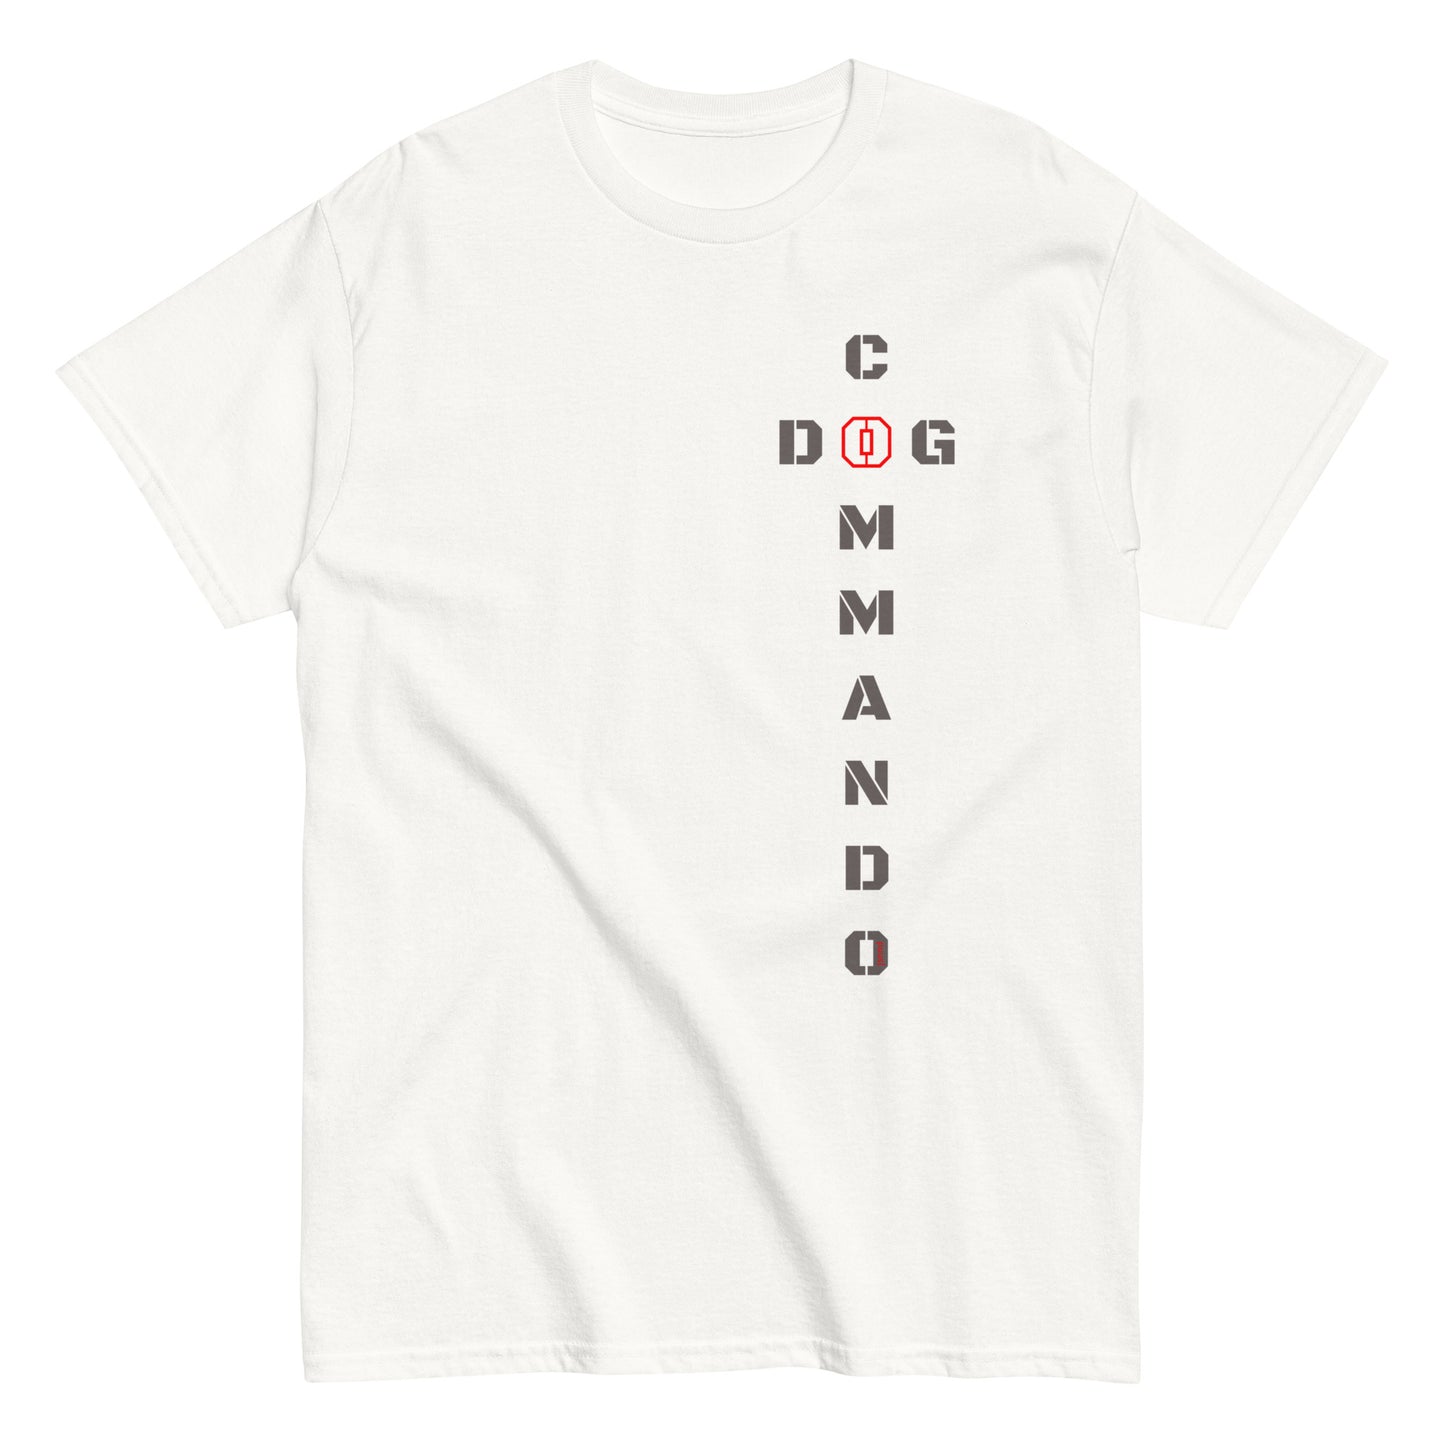 Dog Commando T-shirt